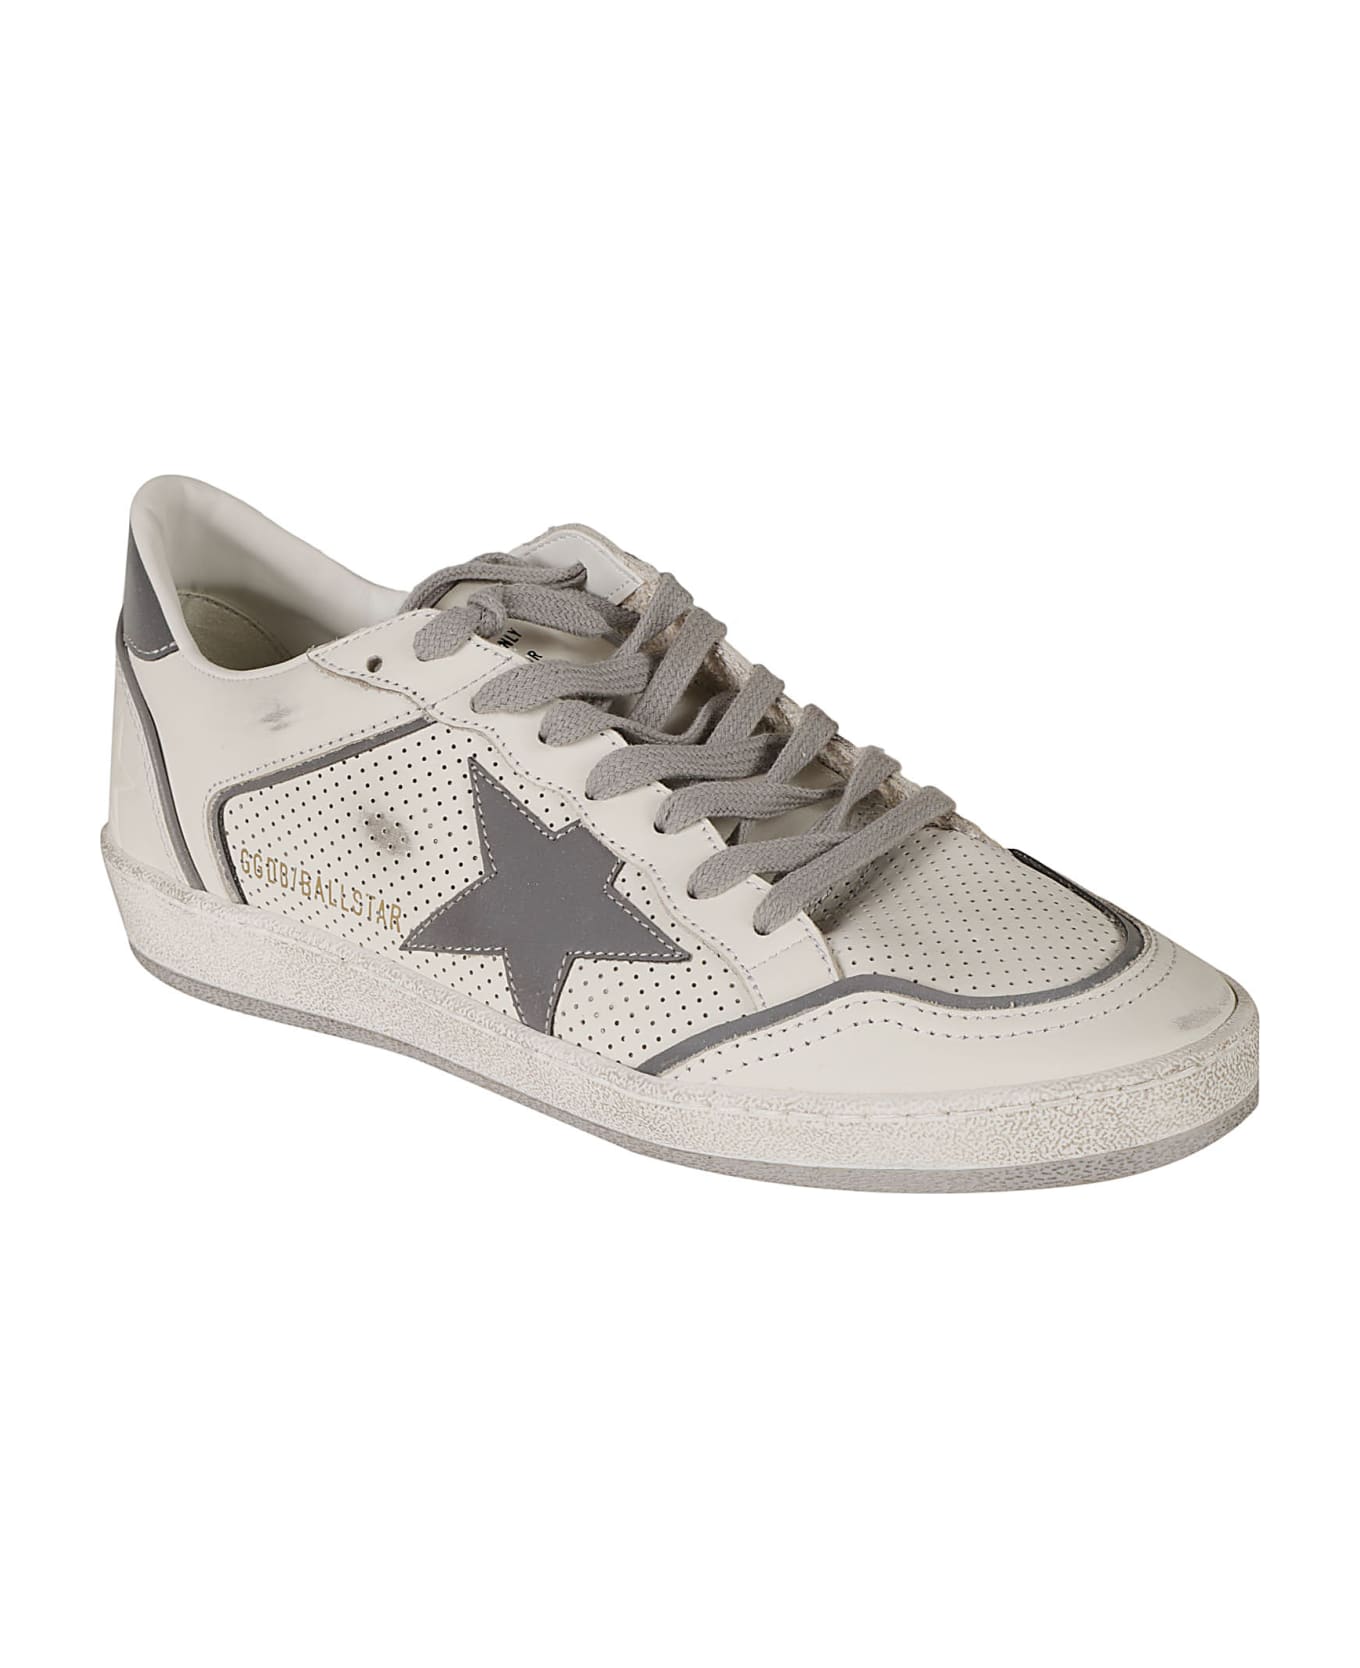 Golden Goose Ball Star Sneakers - White/Silver